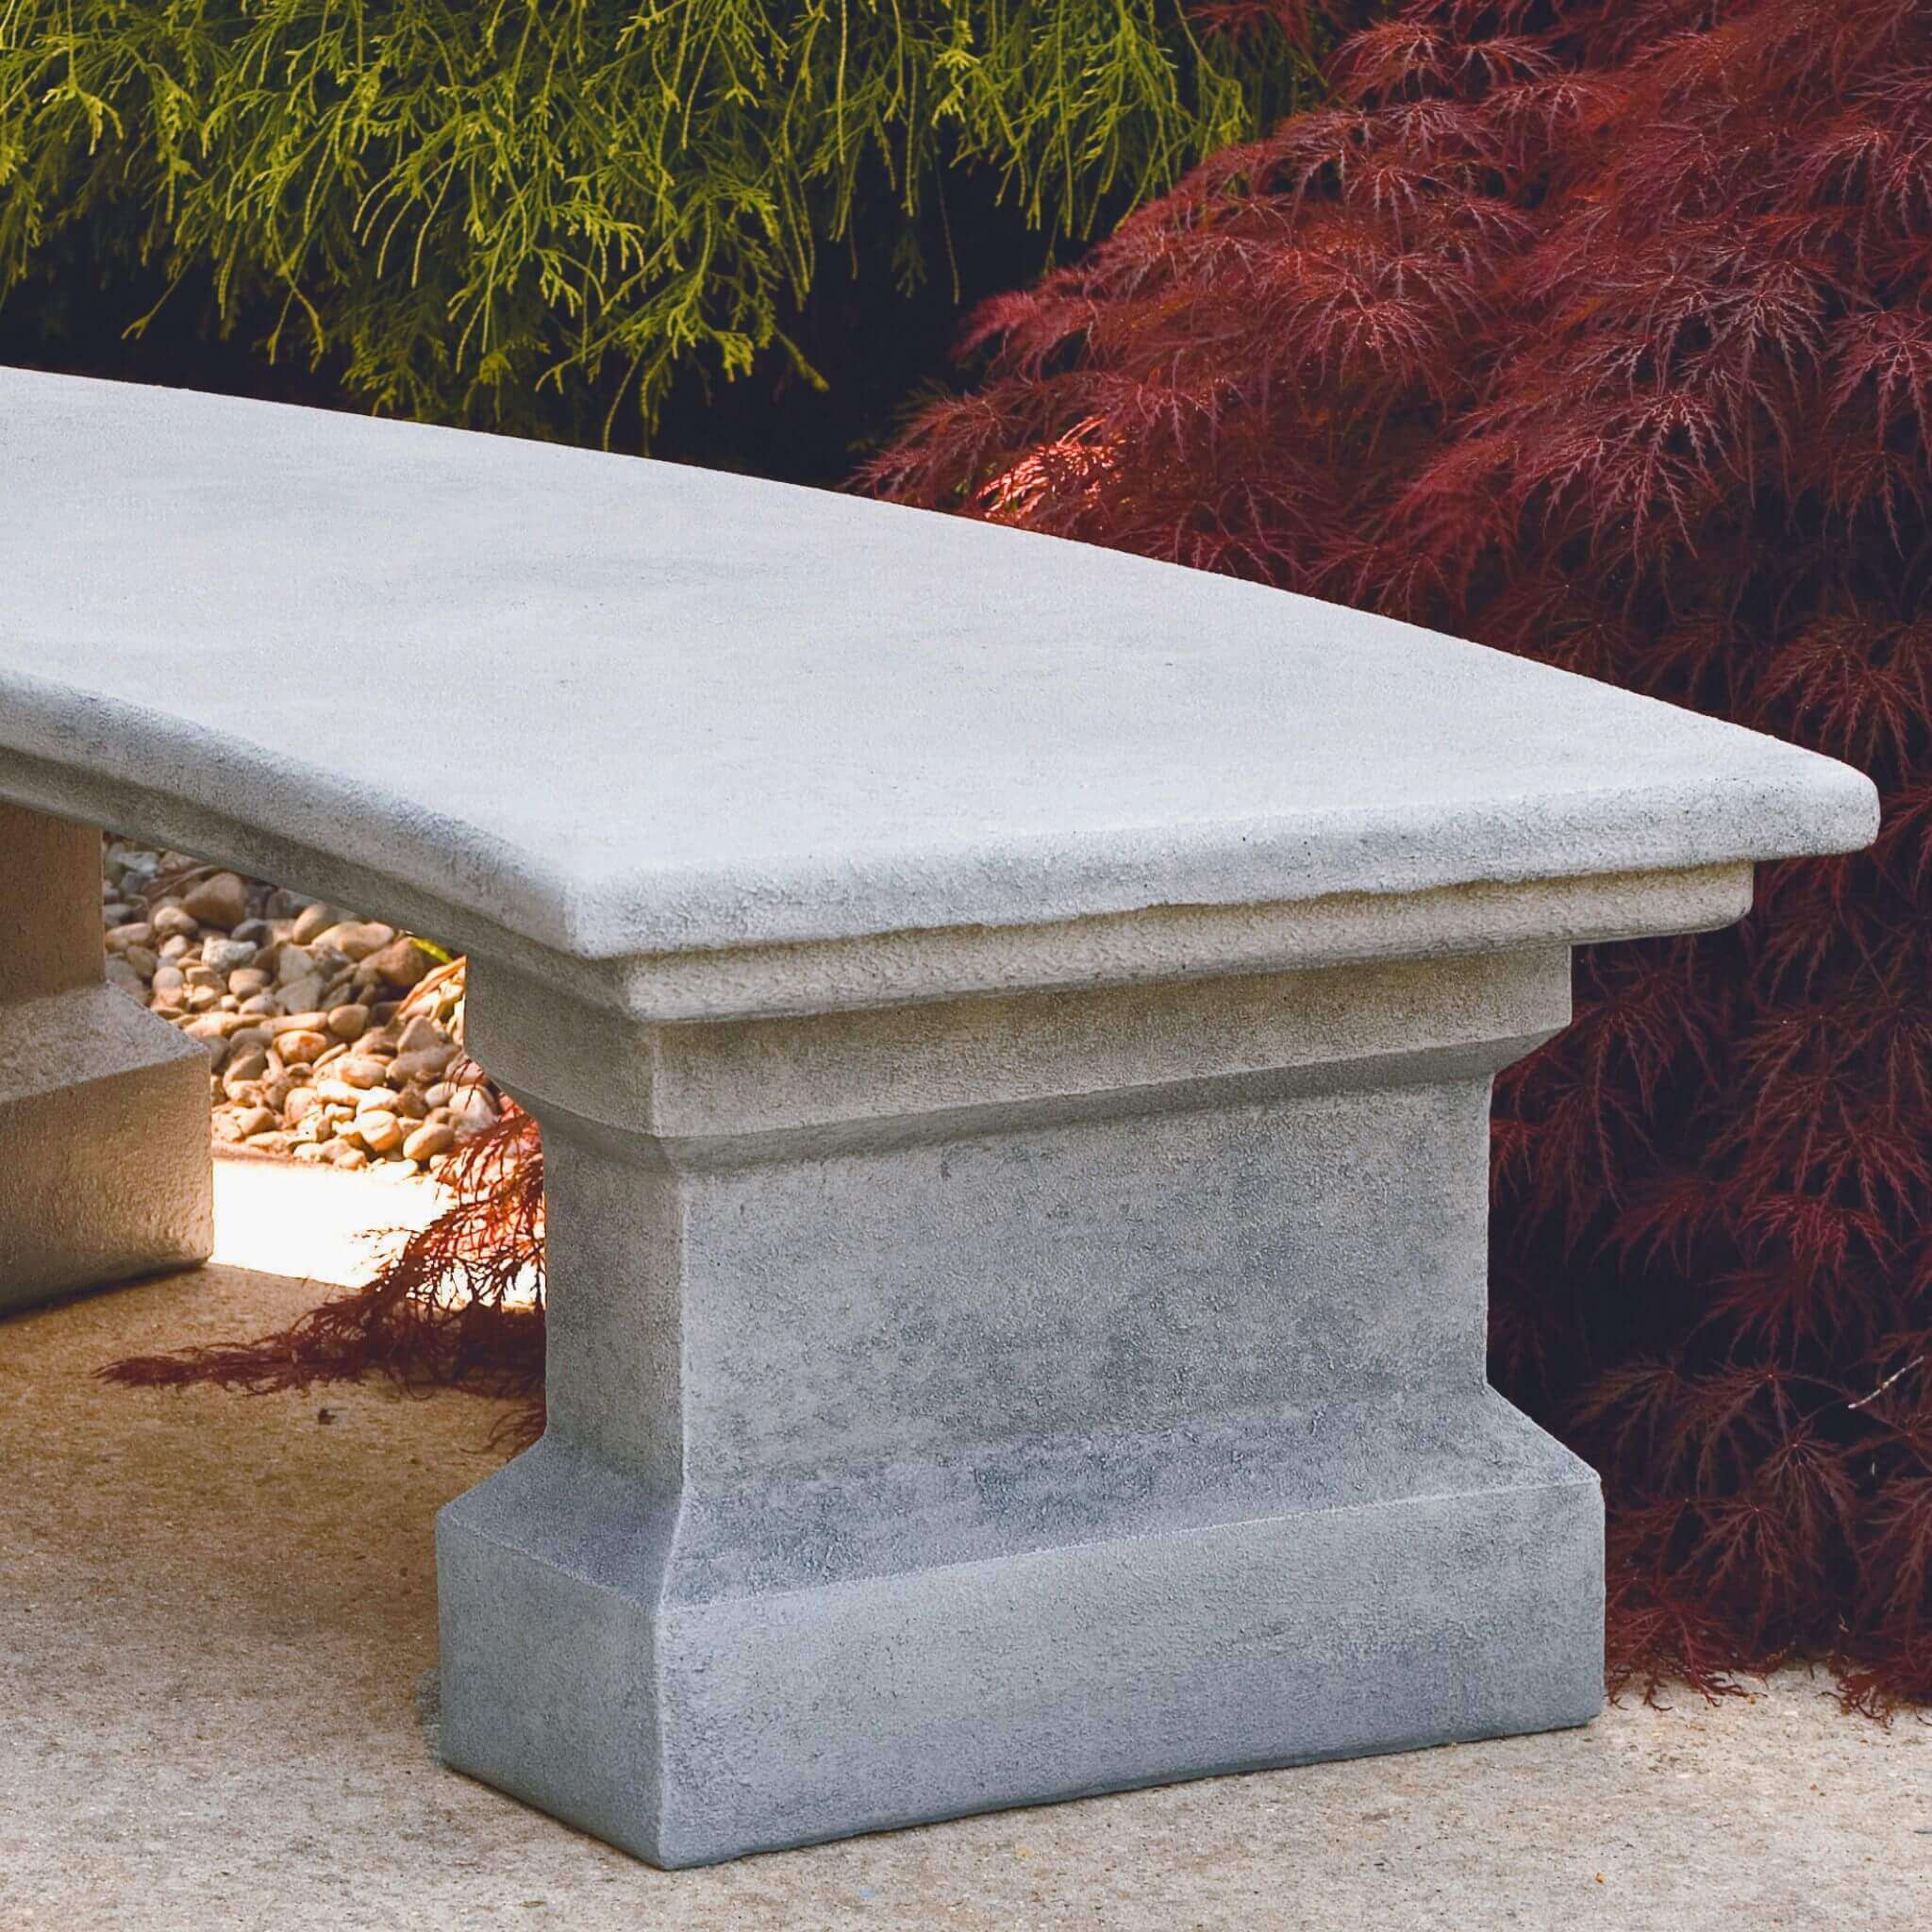 Classic Curved Concrete Garden Bench - Massarellis #4945